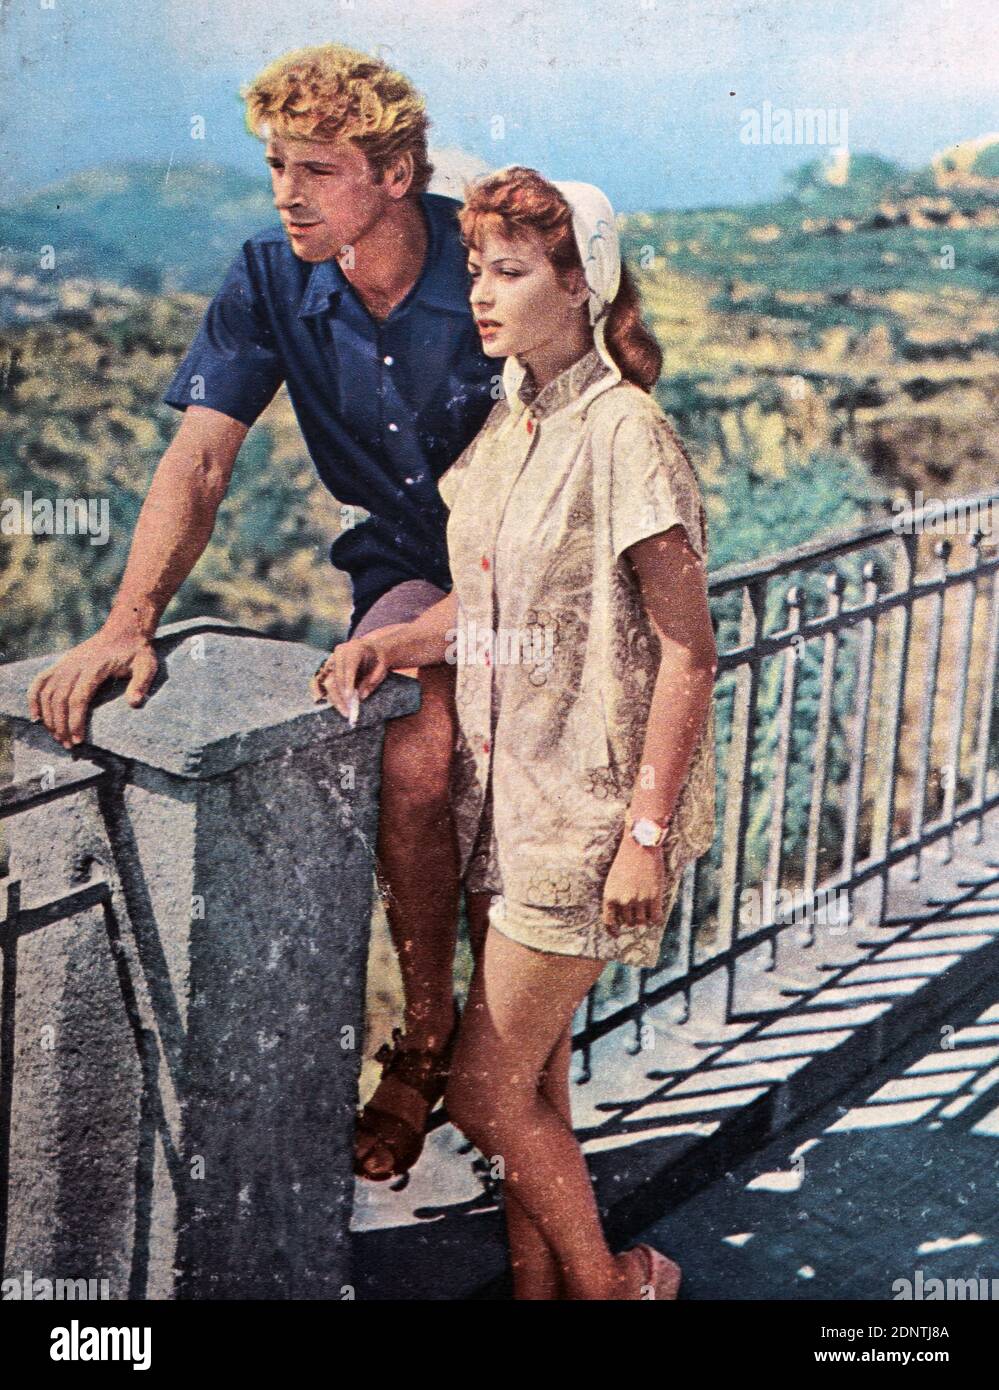 Photograph of Burt Lancaster (1913-1994) and Eva Bartok (1927-1998) exploring the Island of Ischia. Stock Photo